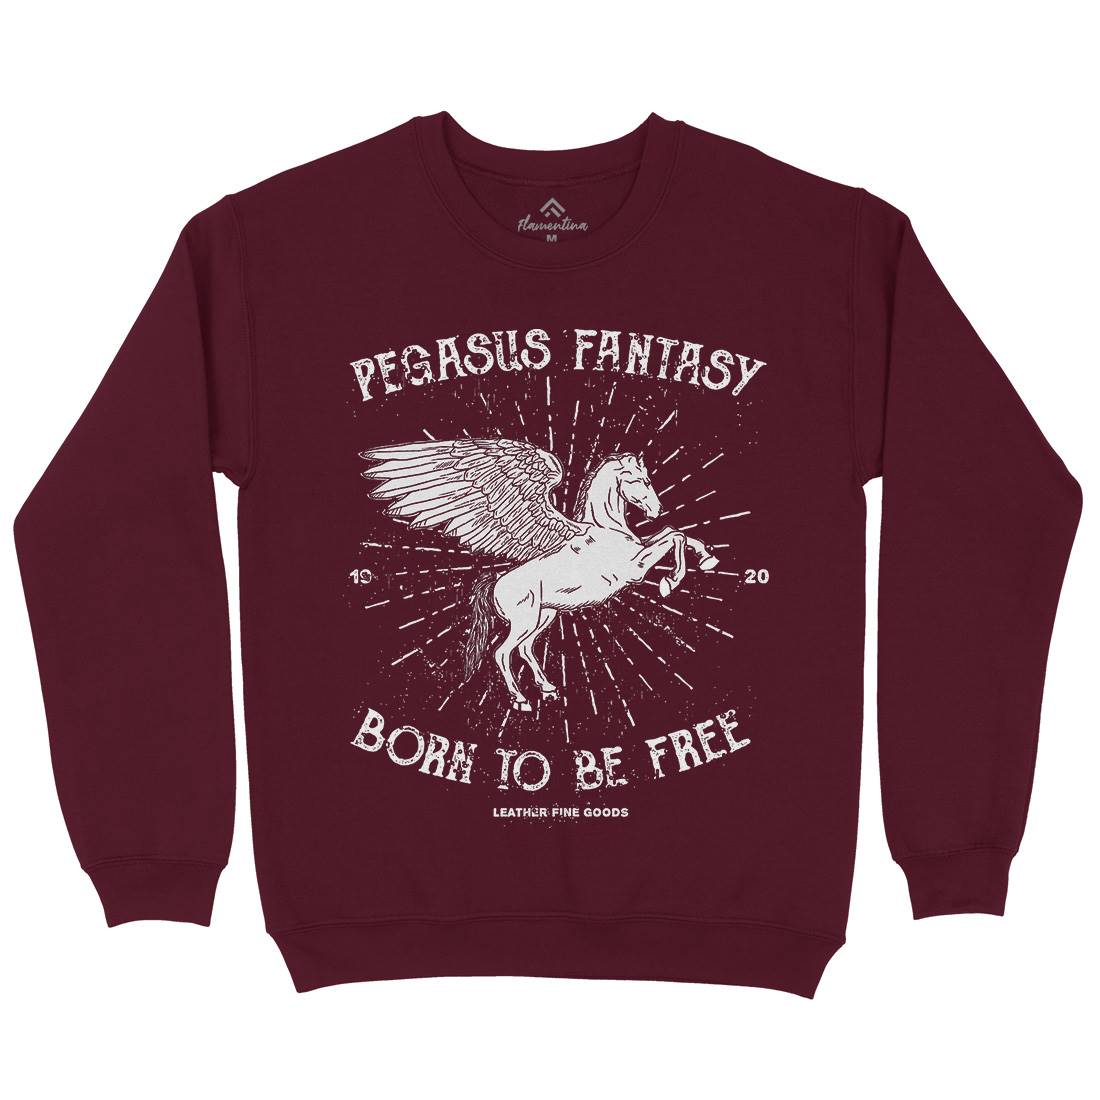 Pegasus Fantasy Kids Crew Neck Sweatshirt Animals B749